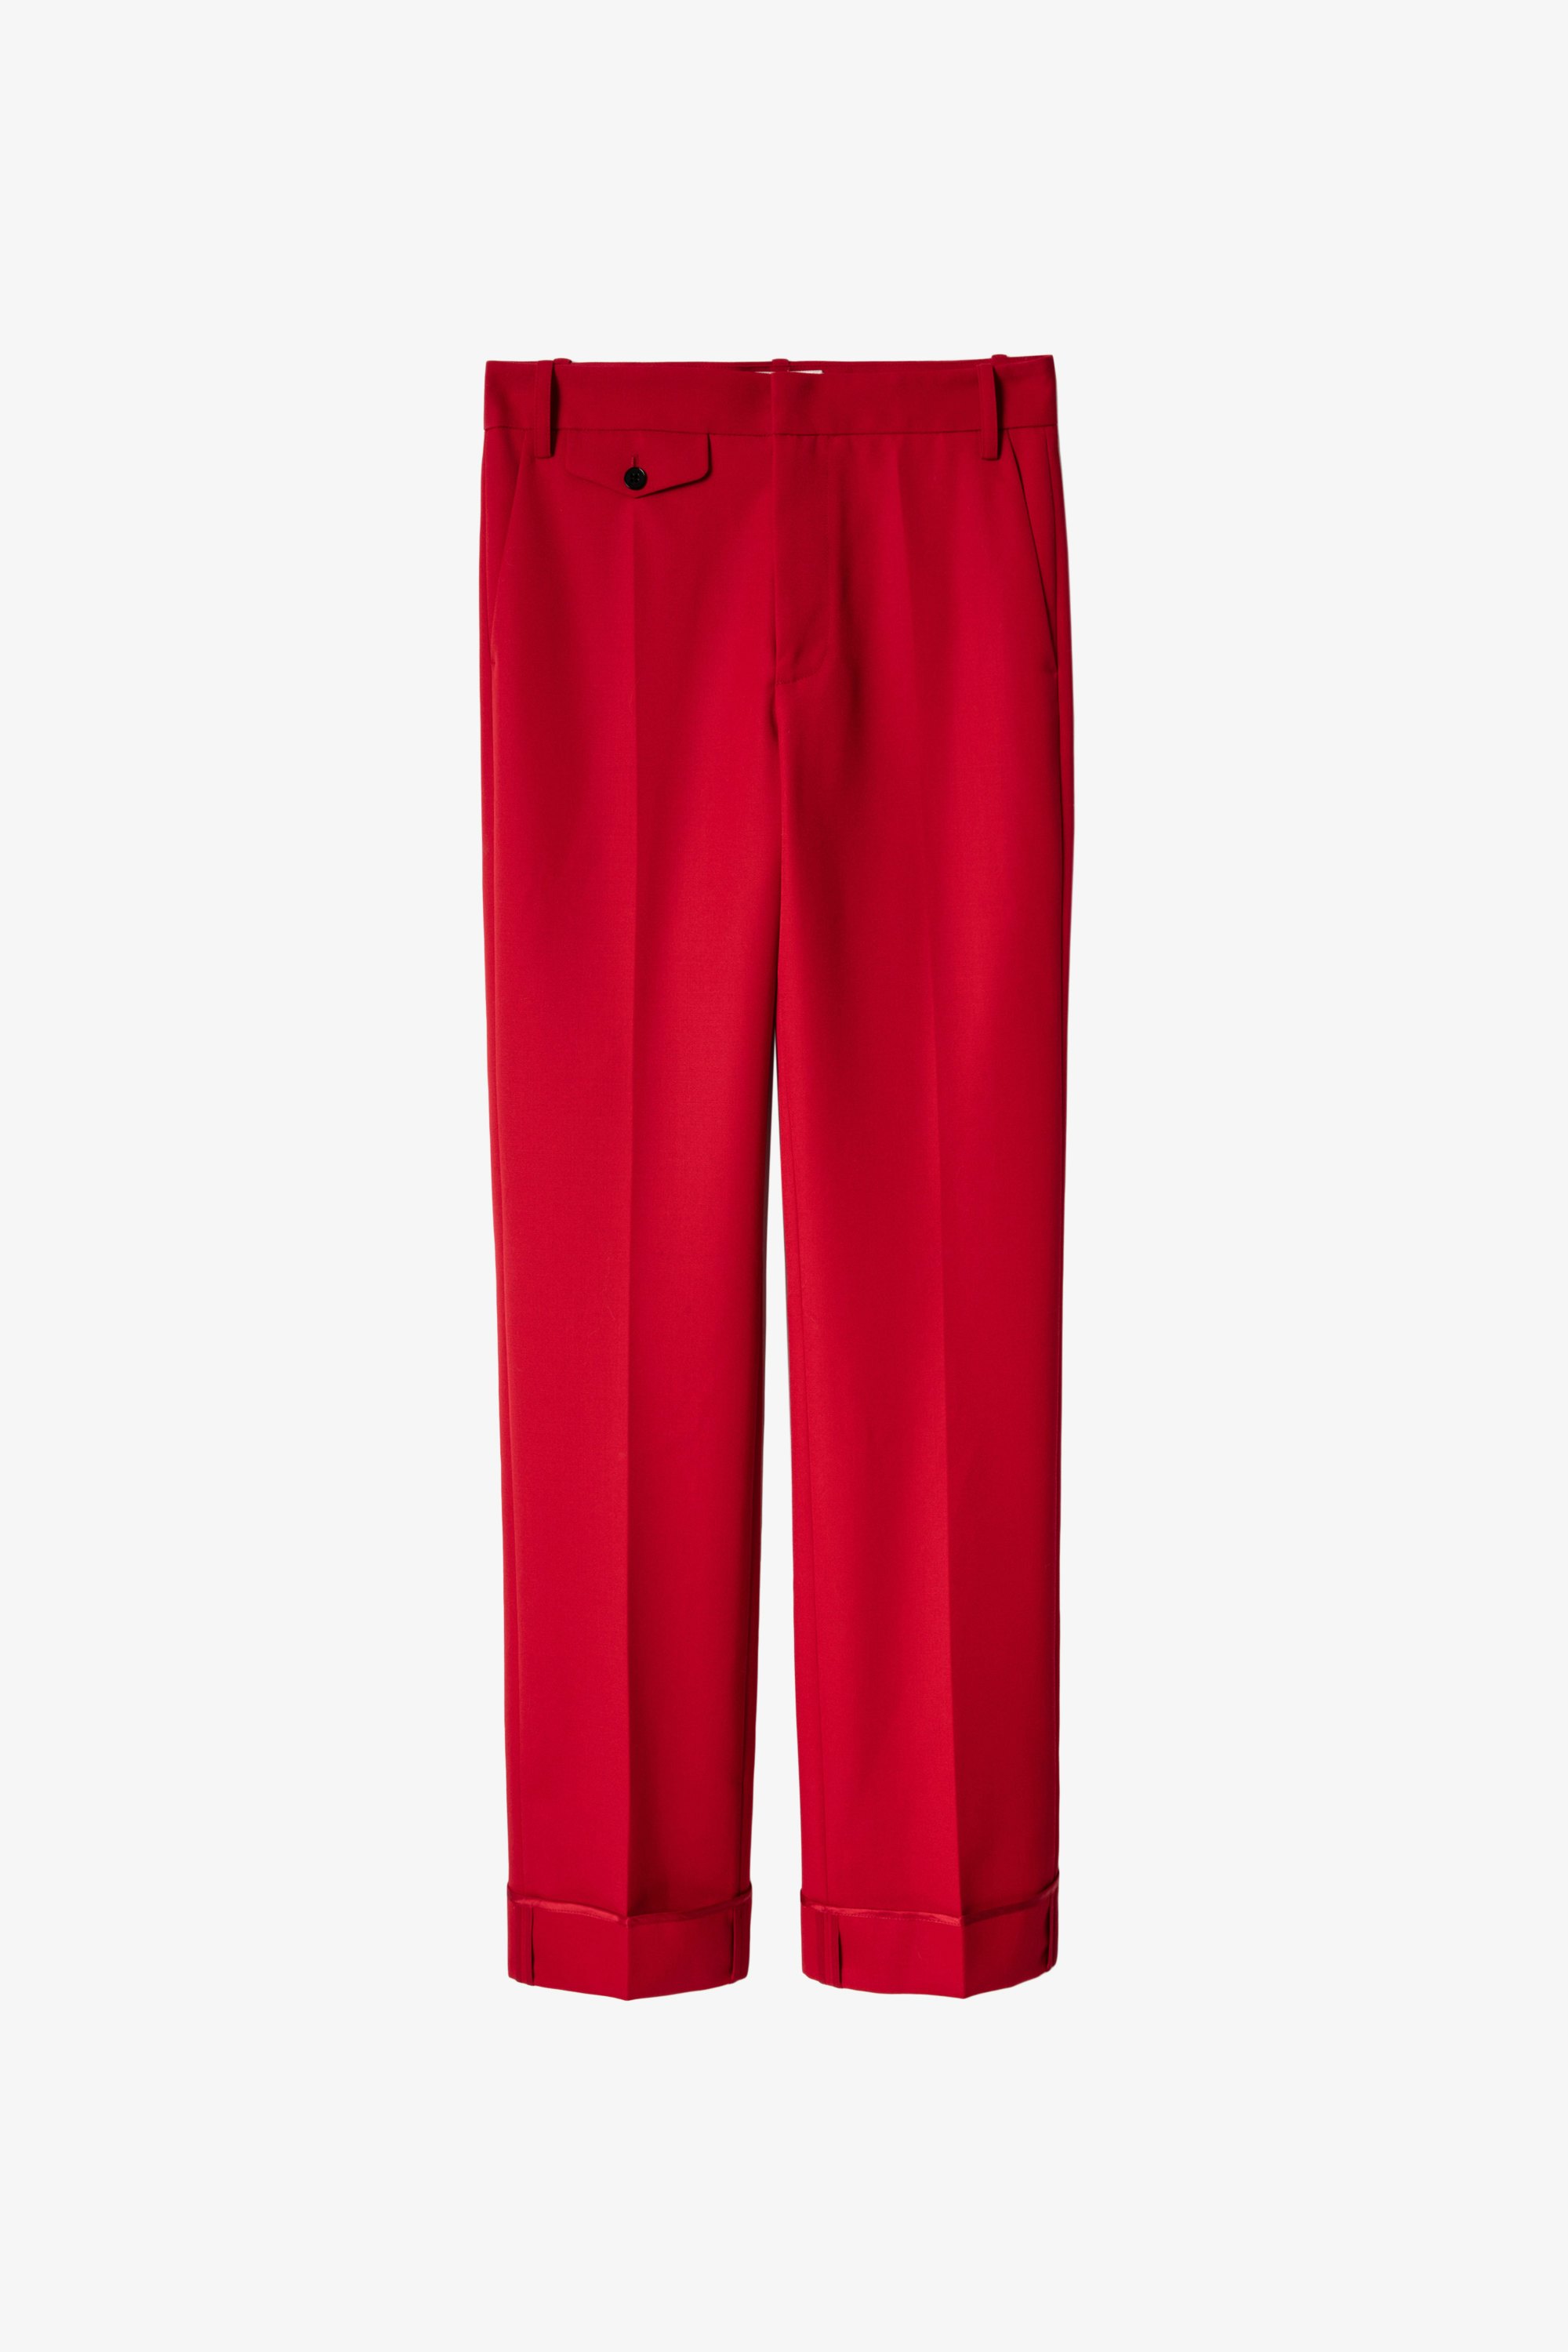 Poetia Trousers Women’s red gabardine trousers